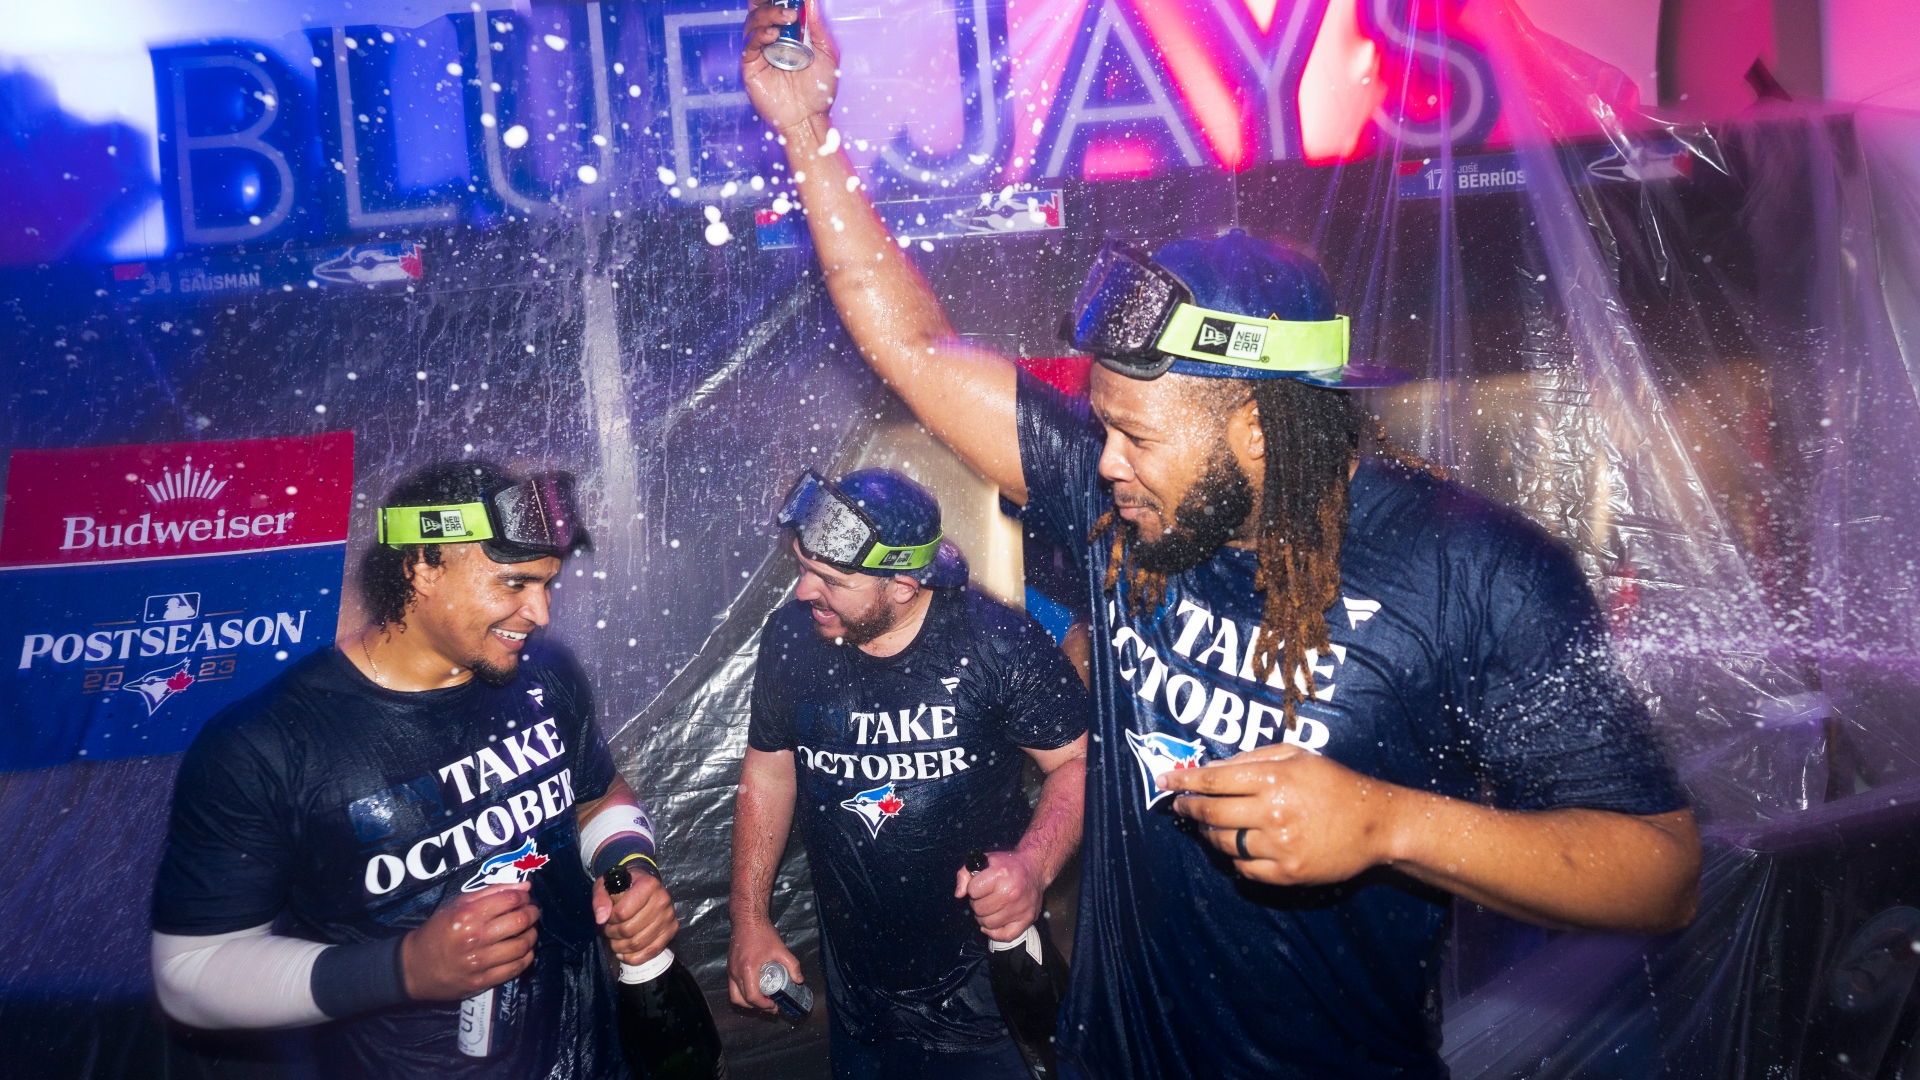 Toronto Blue Jays on X: It's #PlayBallWeekend! We celebrated in